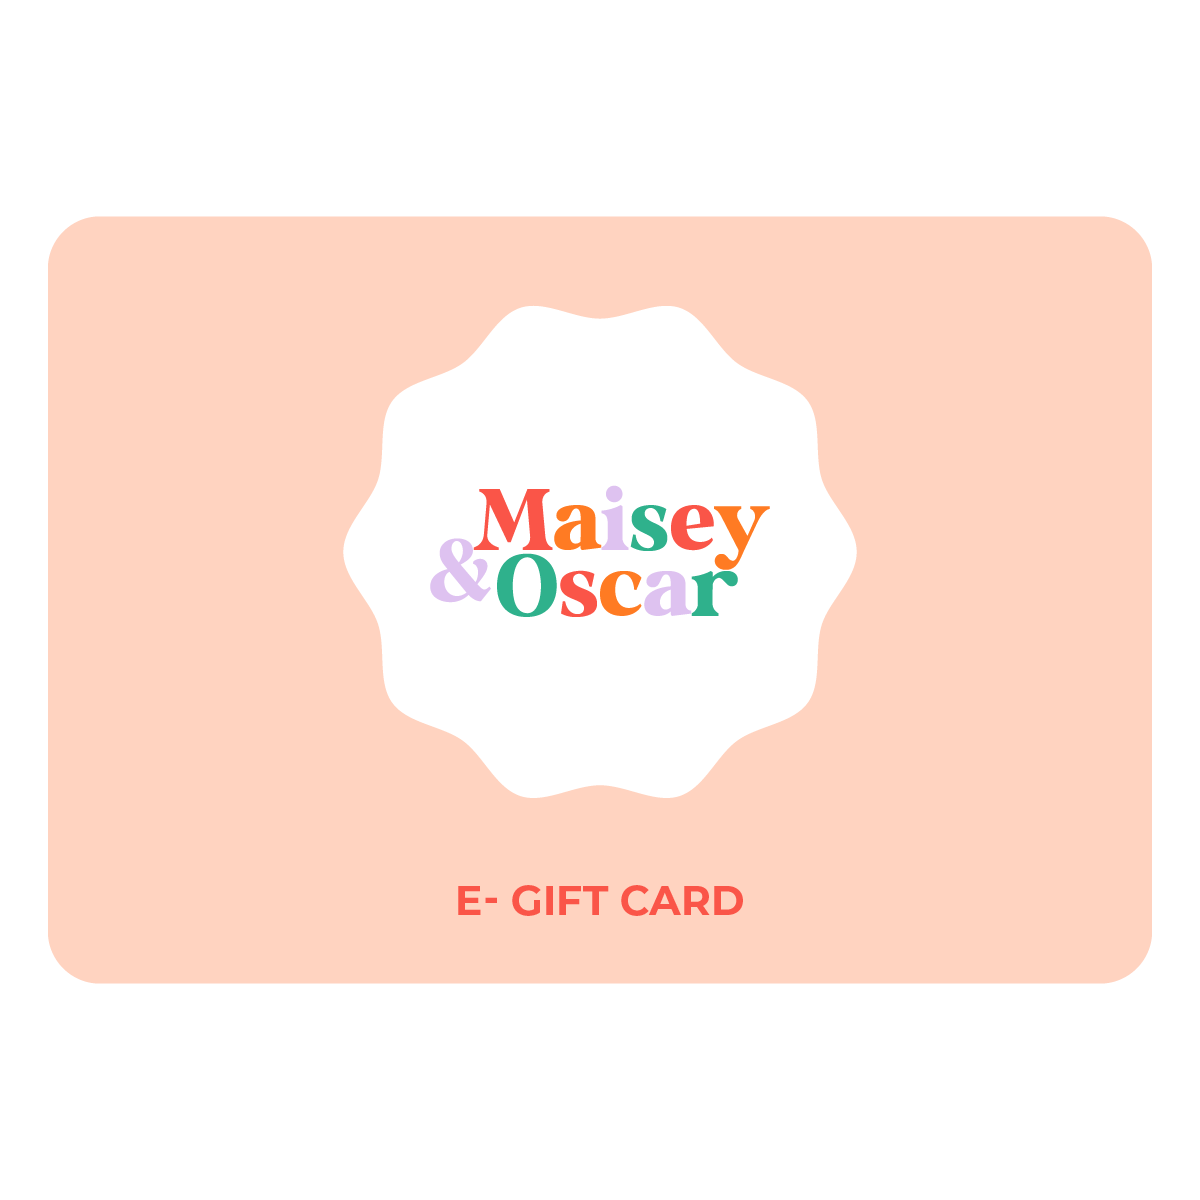 Maisey & Oscar E-Gift Card